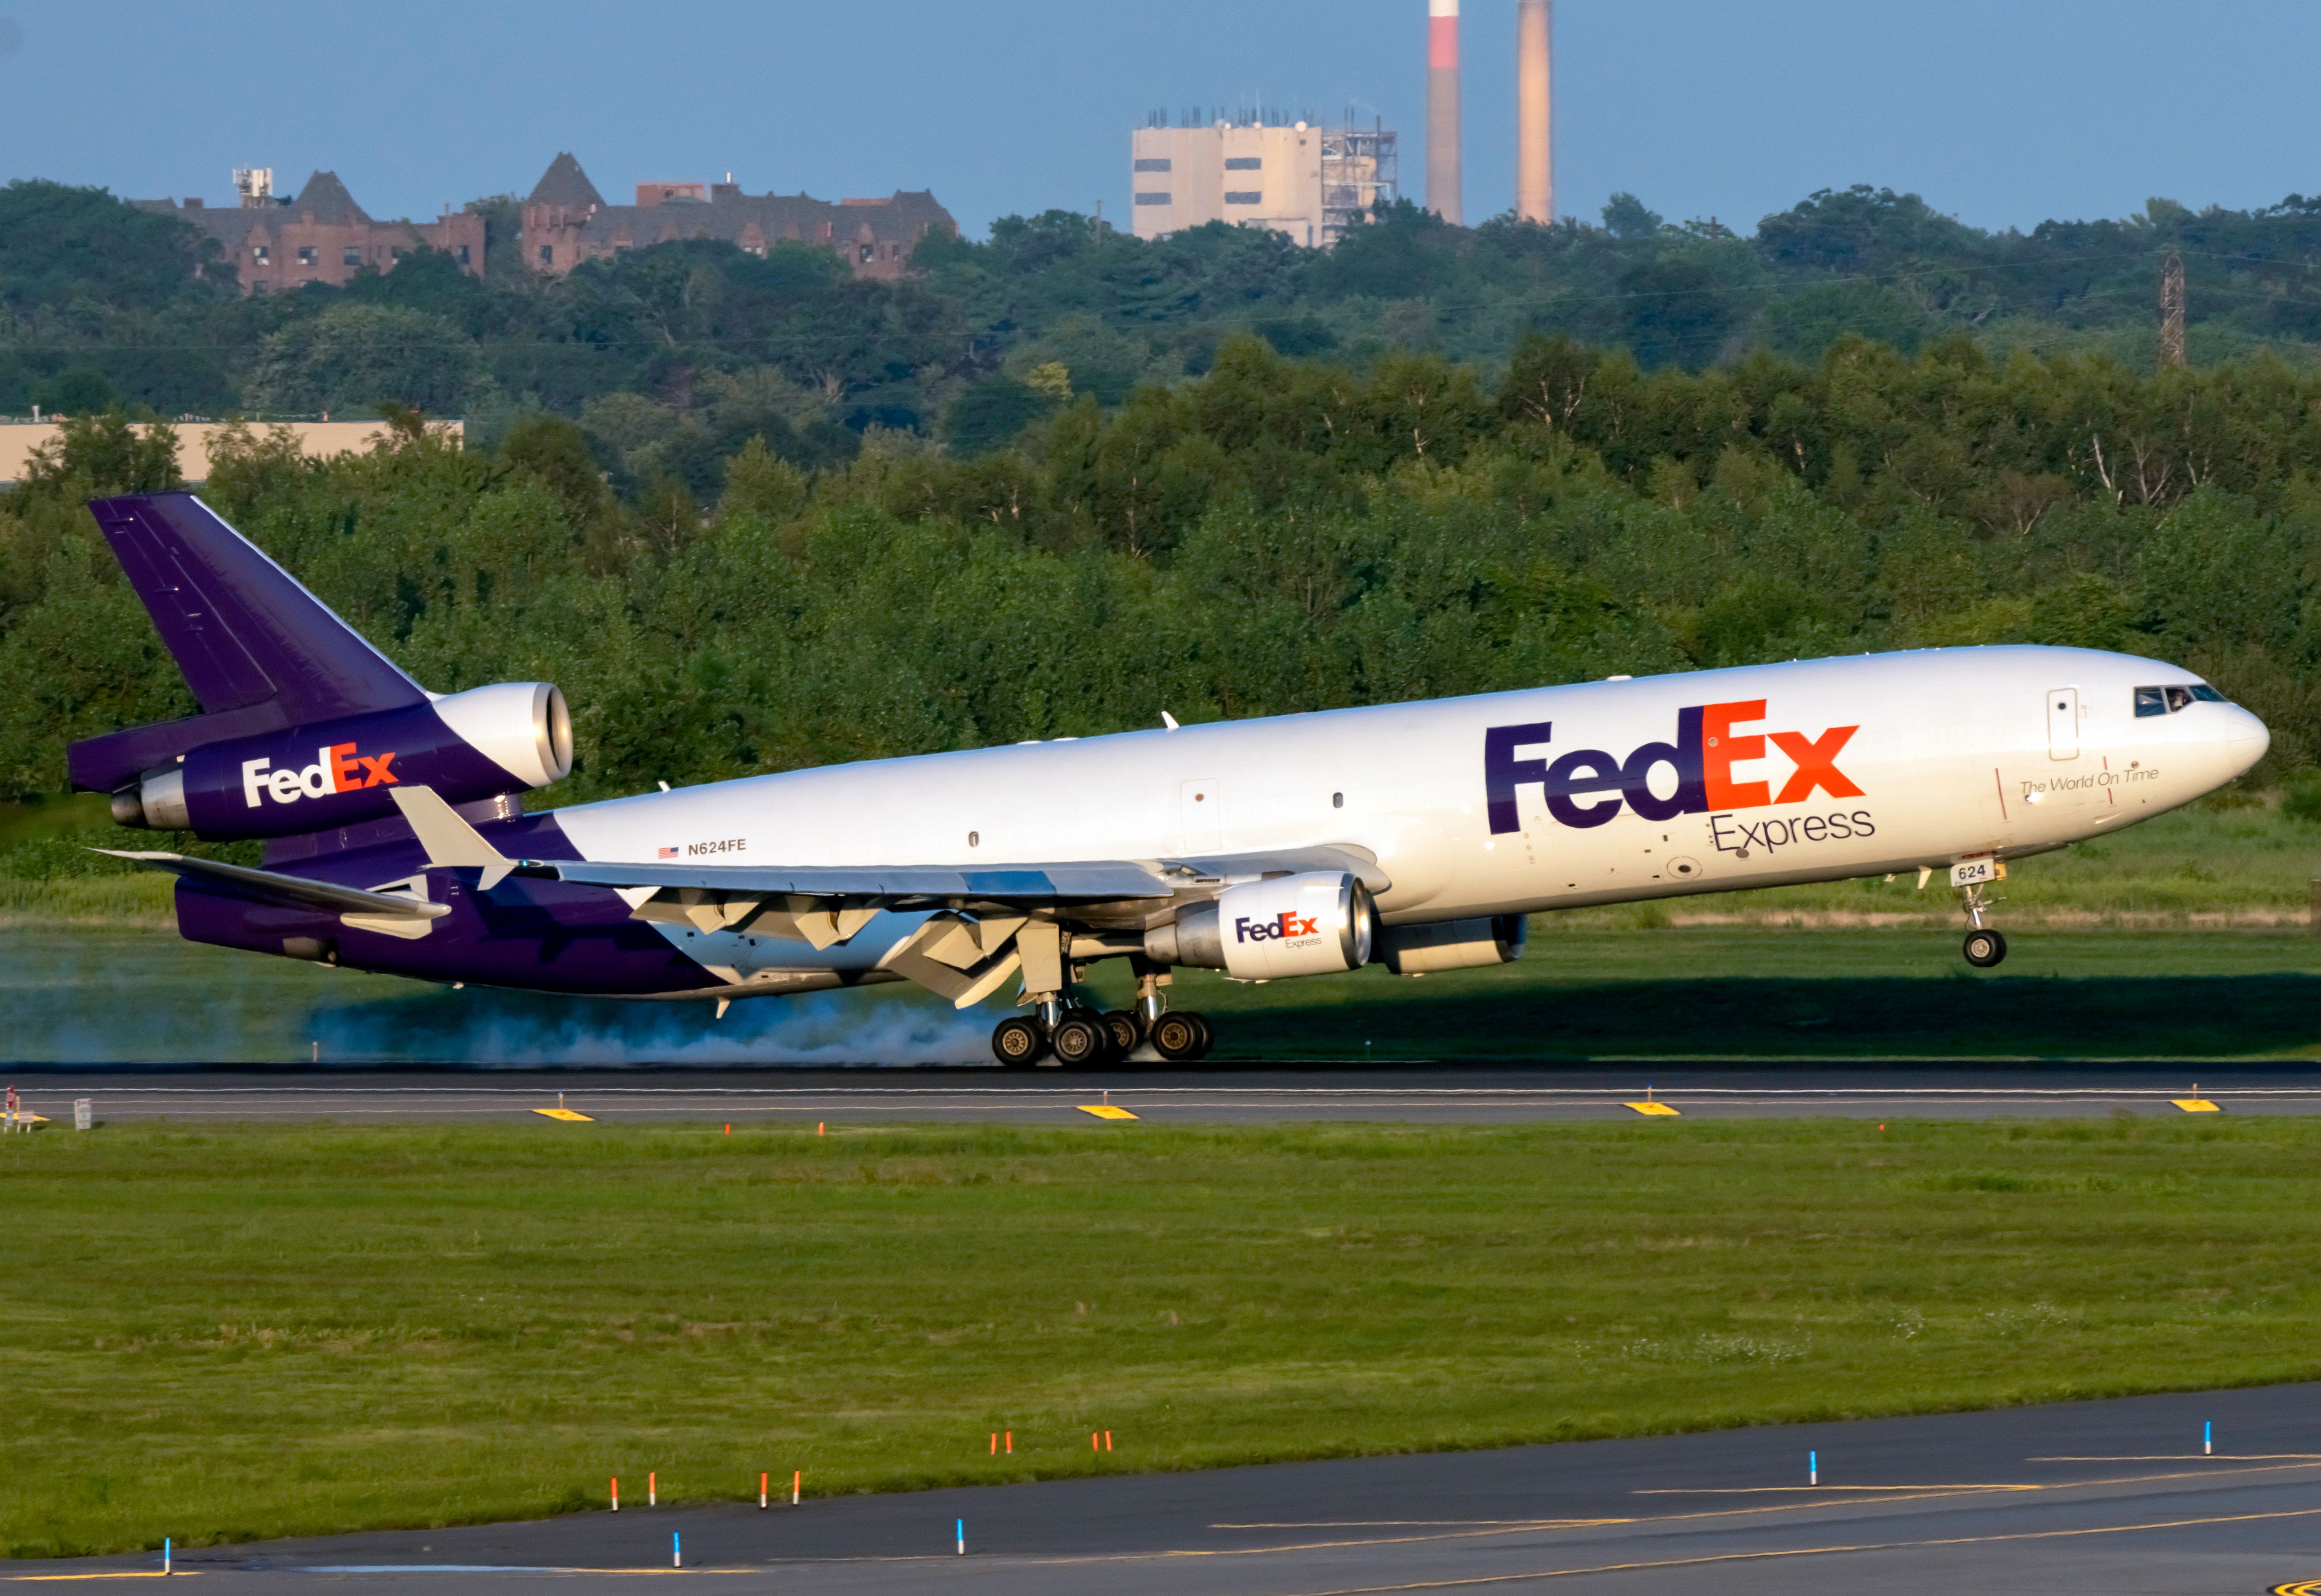 FedEx has 57 McDonnell-Douglas MD-11F aircraft